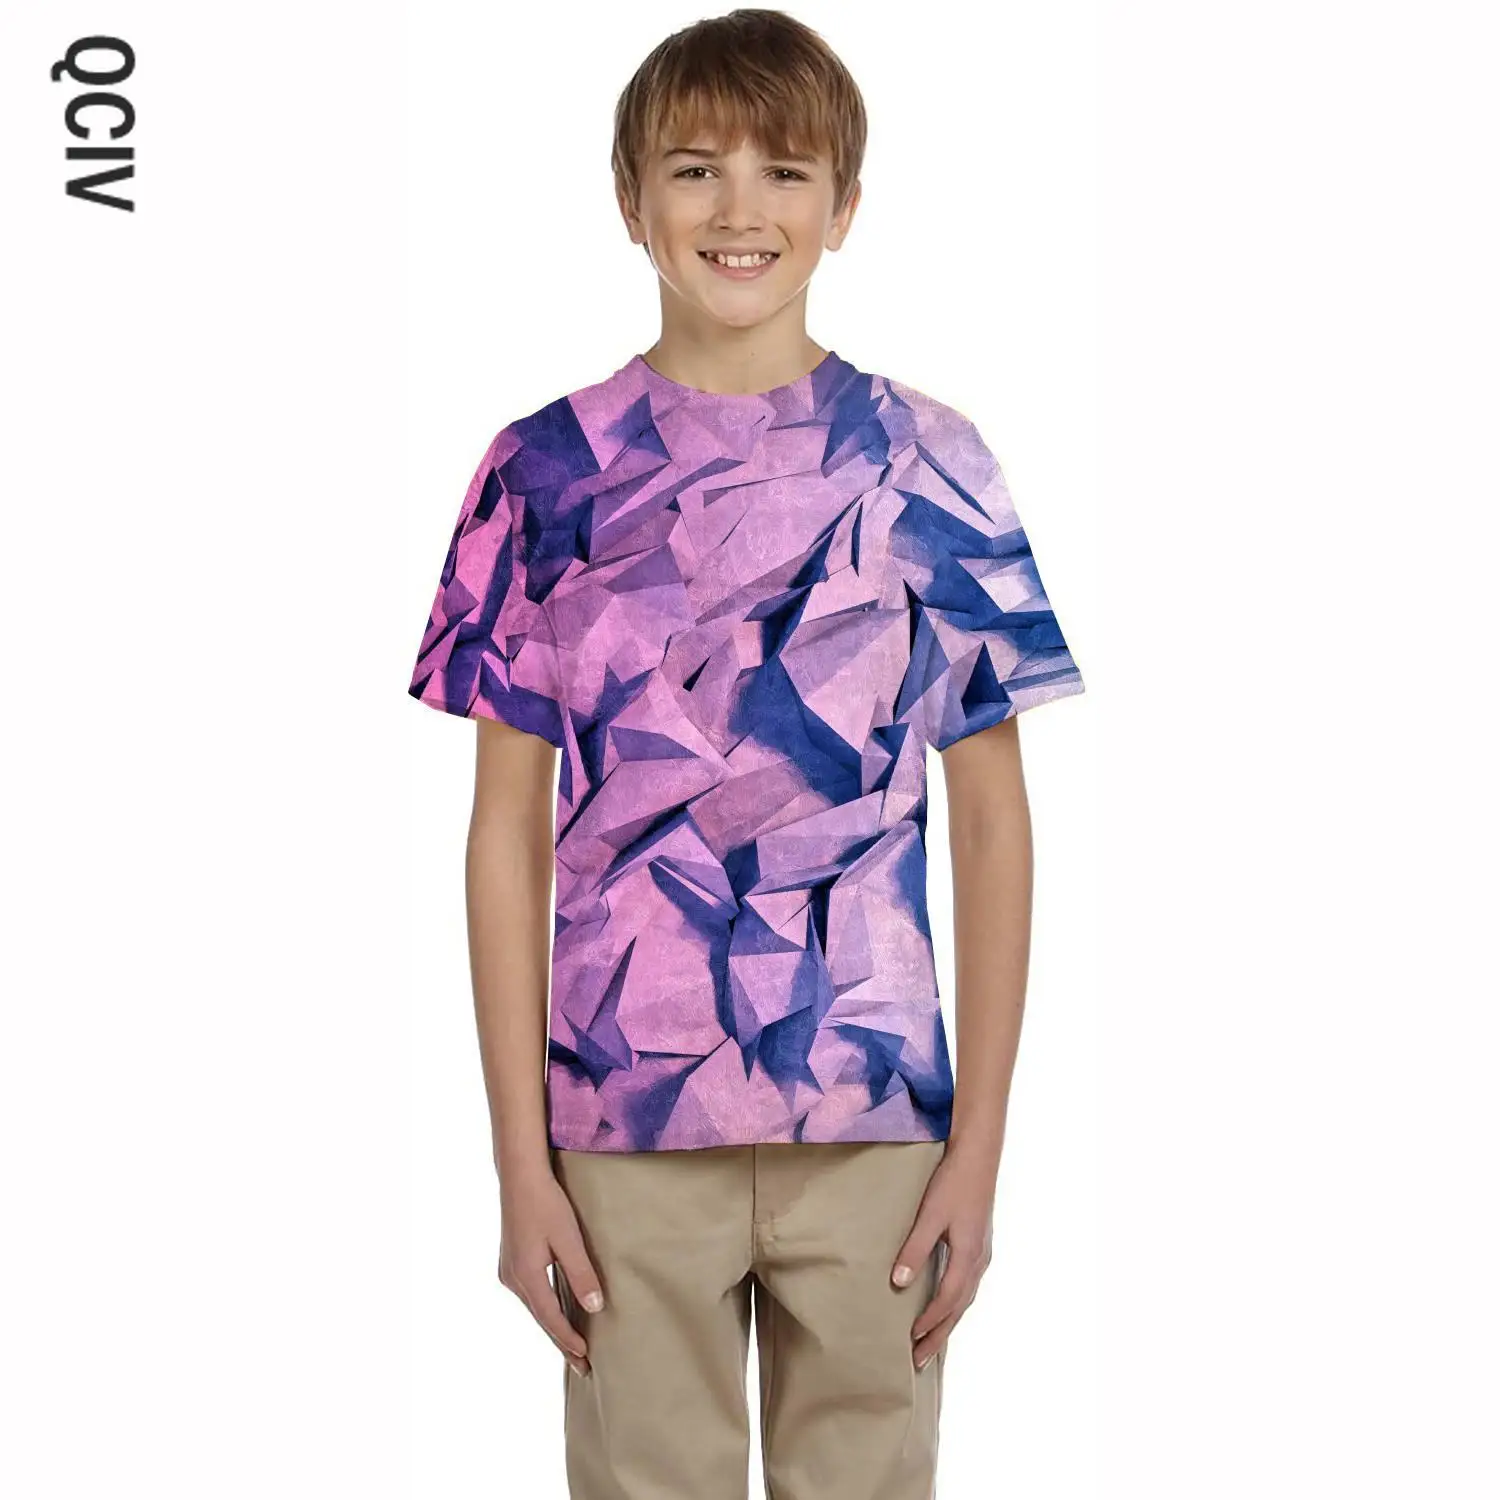 

QCIV Brand Geometry t shirt kids Colorful Tshirts Casual Abstract Tshirt Printed Graphics T-shirts 3d kids Clothing T shirts